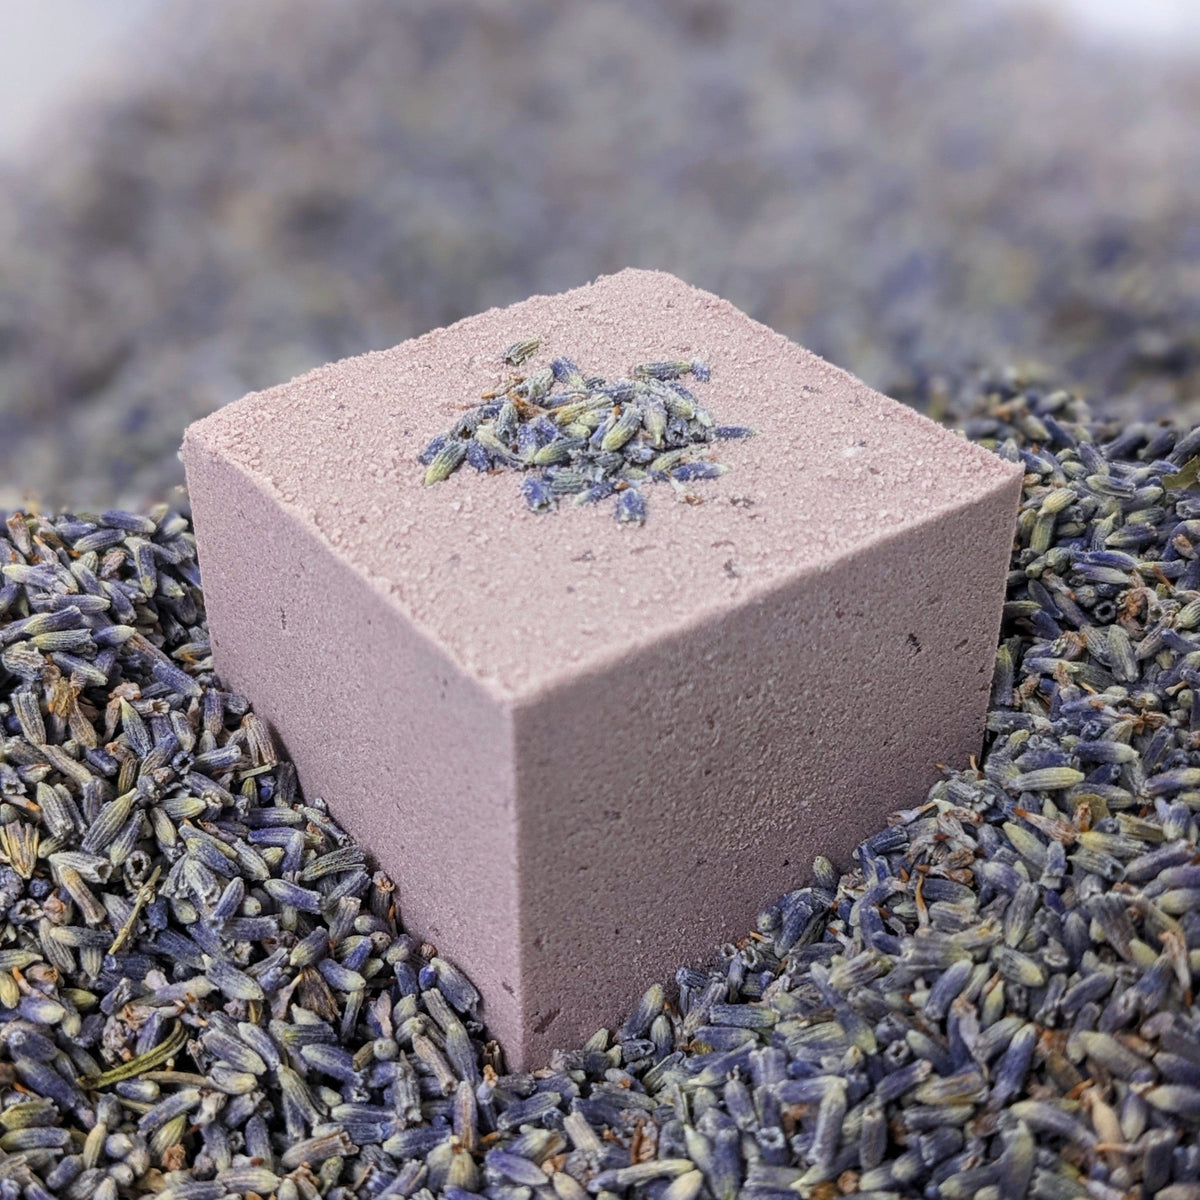 Herbal-Infused Lavender Bath Bombs - The Good Rub